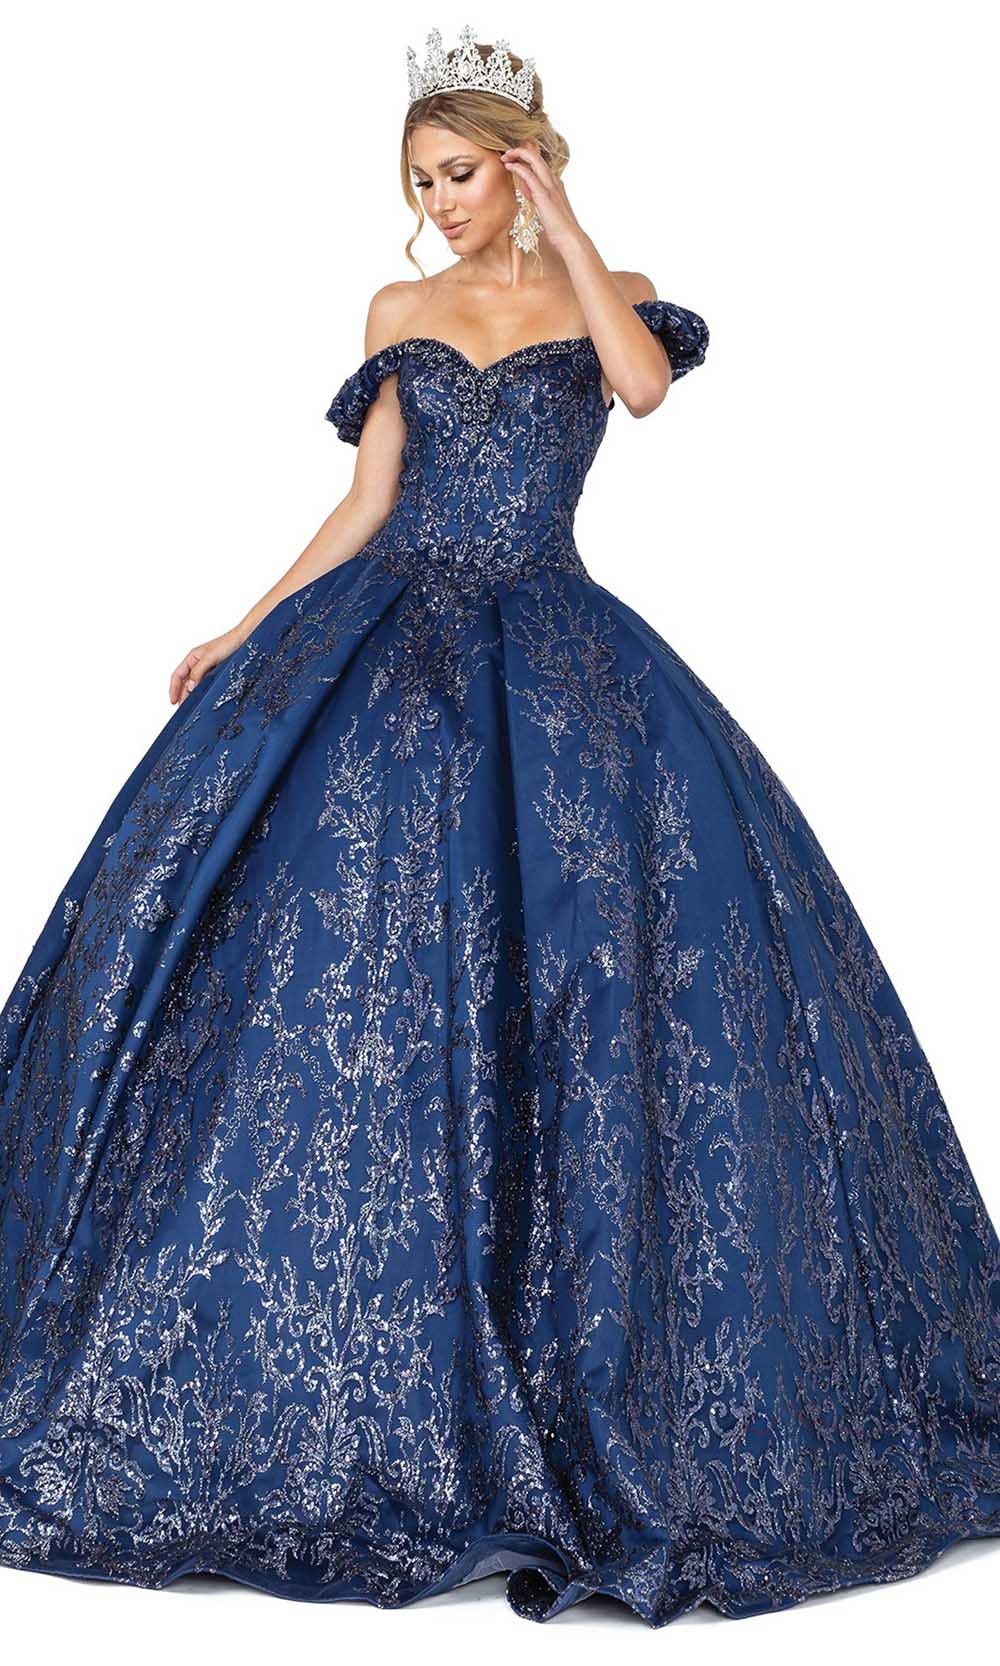 Dancing Queen - 1643 Off Shoulder Beaded Glittery Ballgown In Blue